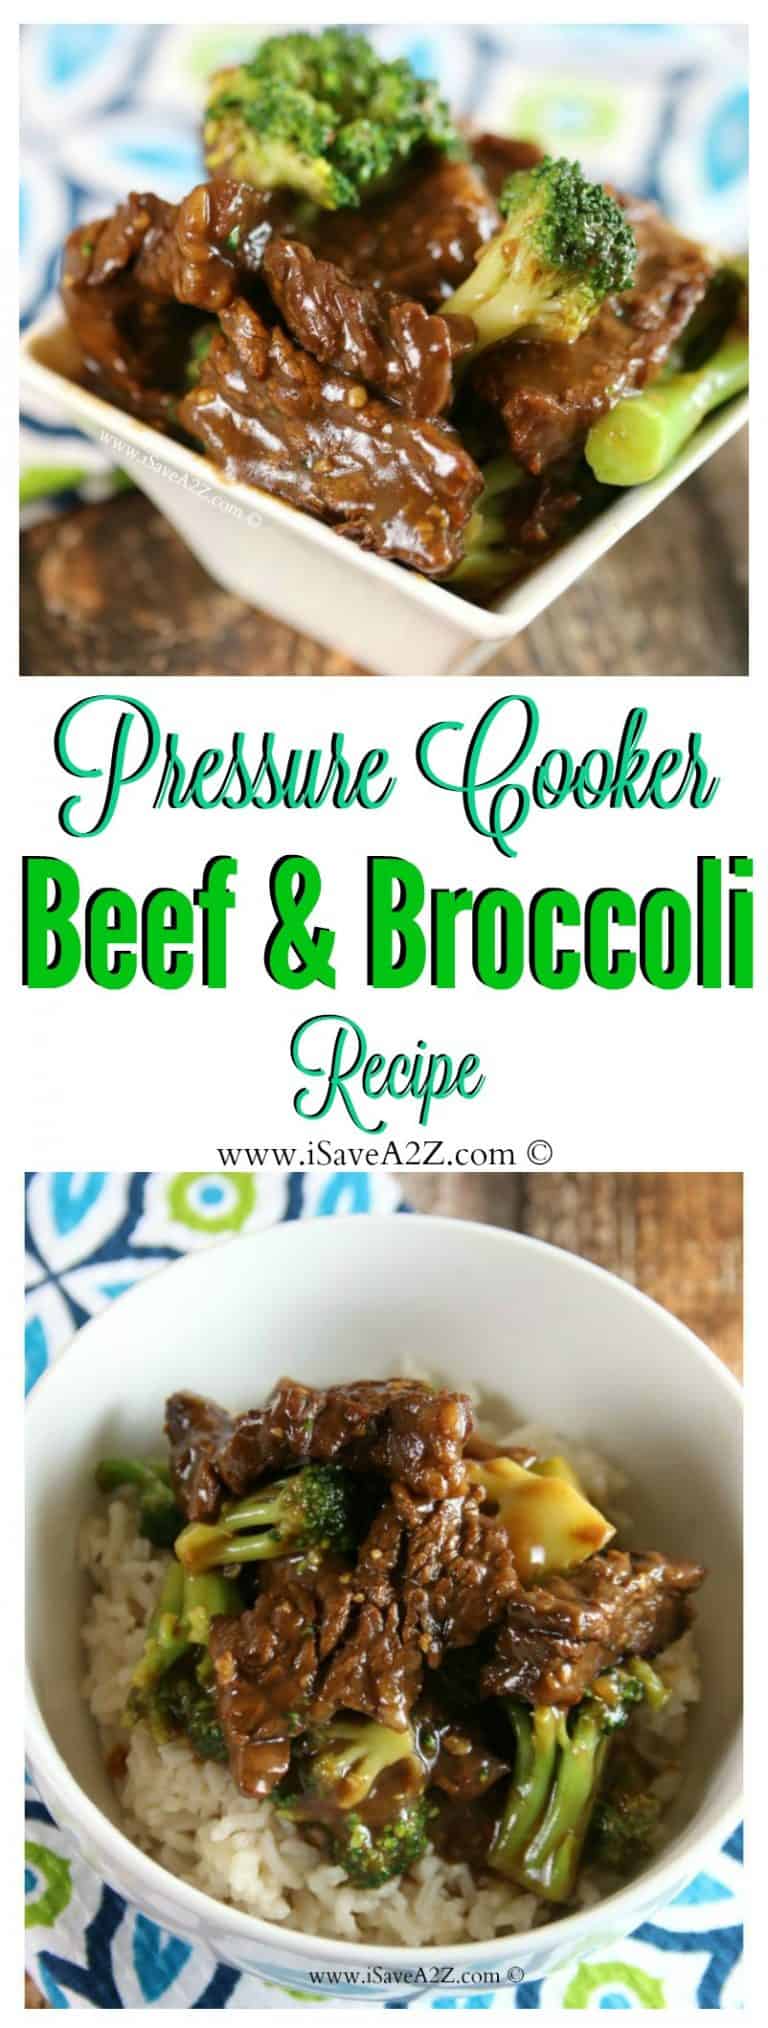 Easy Pressure Cooker Beef and Broccoli Recipe - iSaveA2Z.com